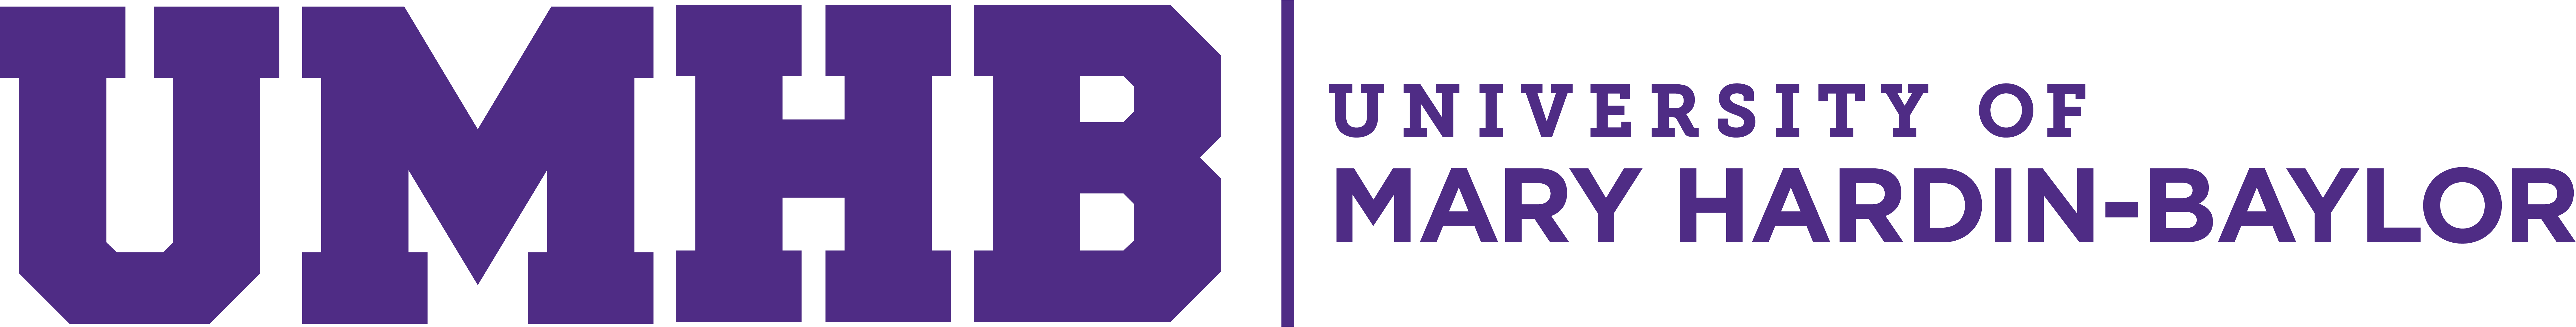 Primary UMHB logo - color purple